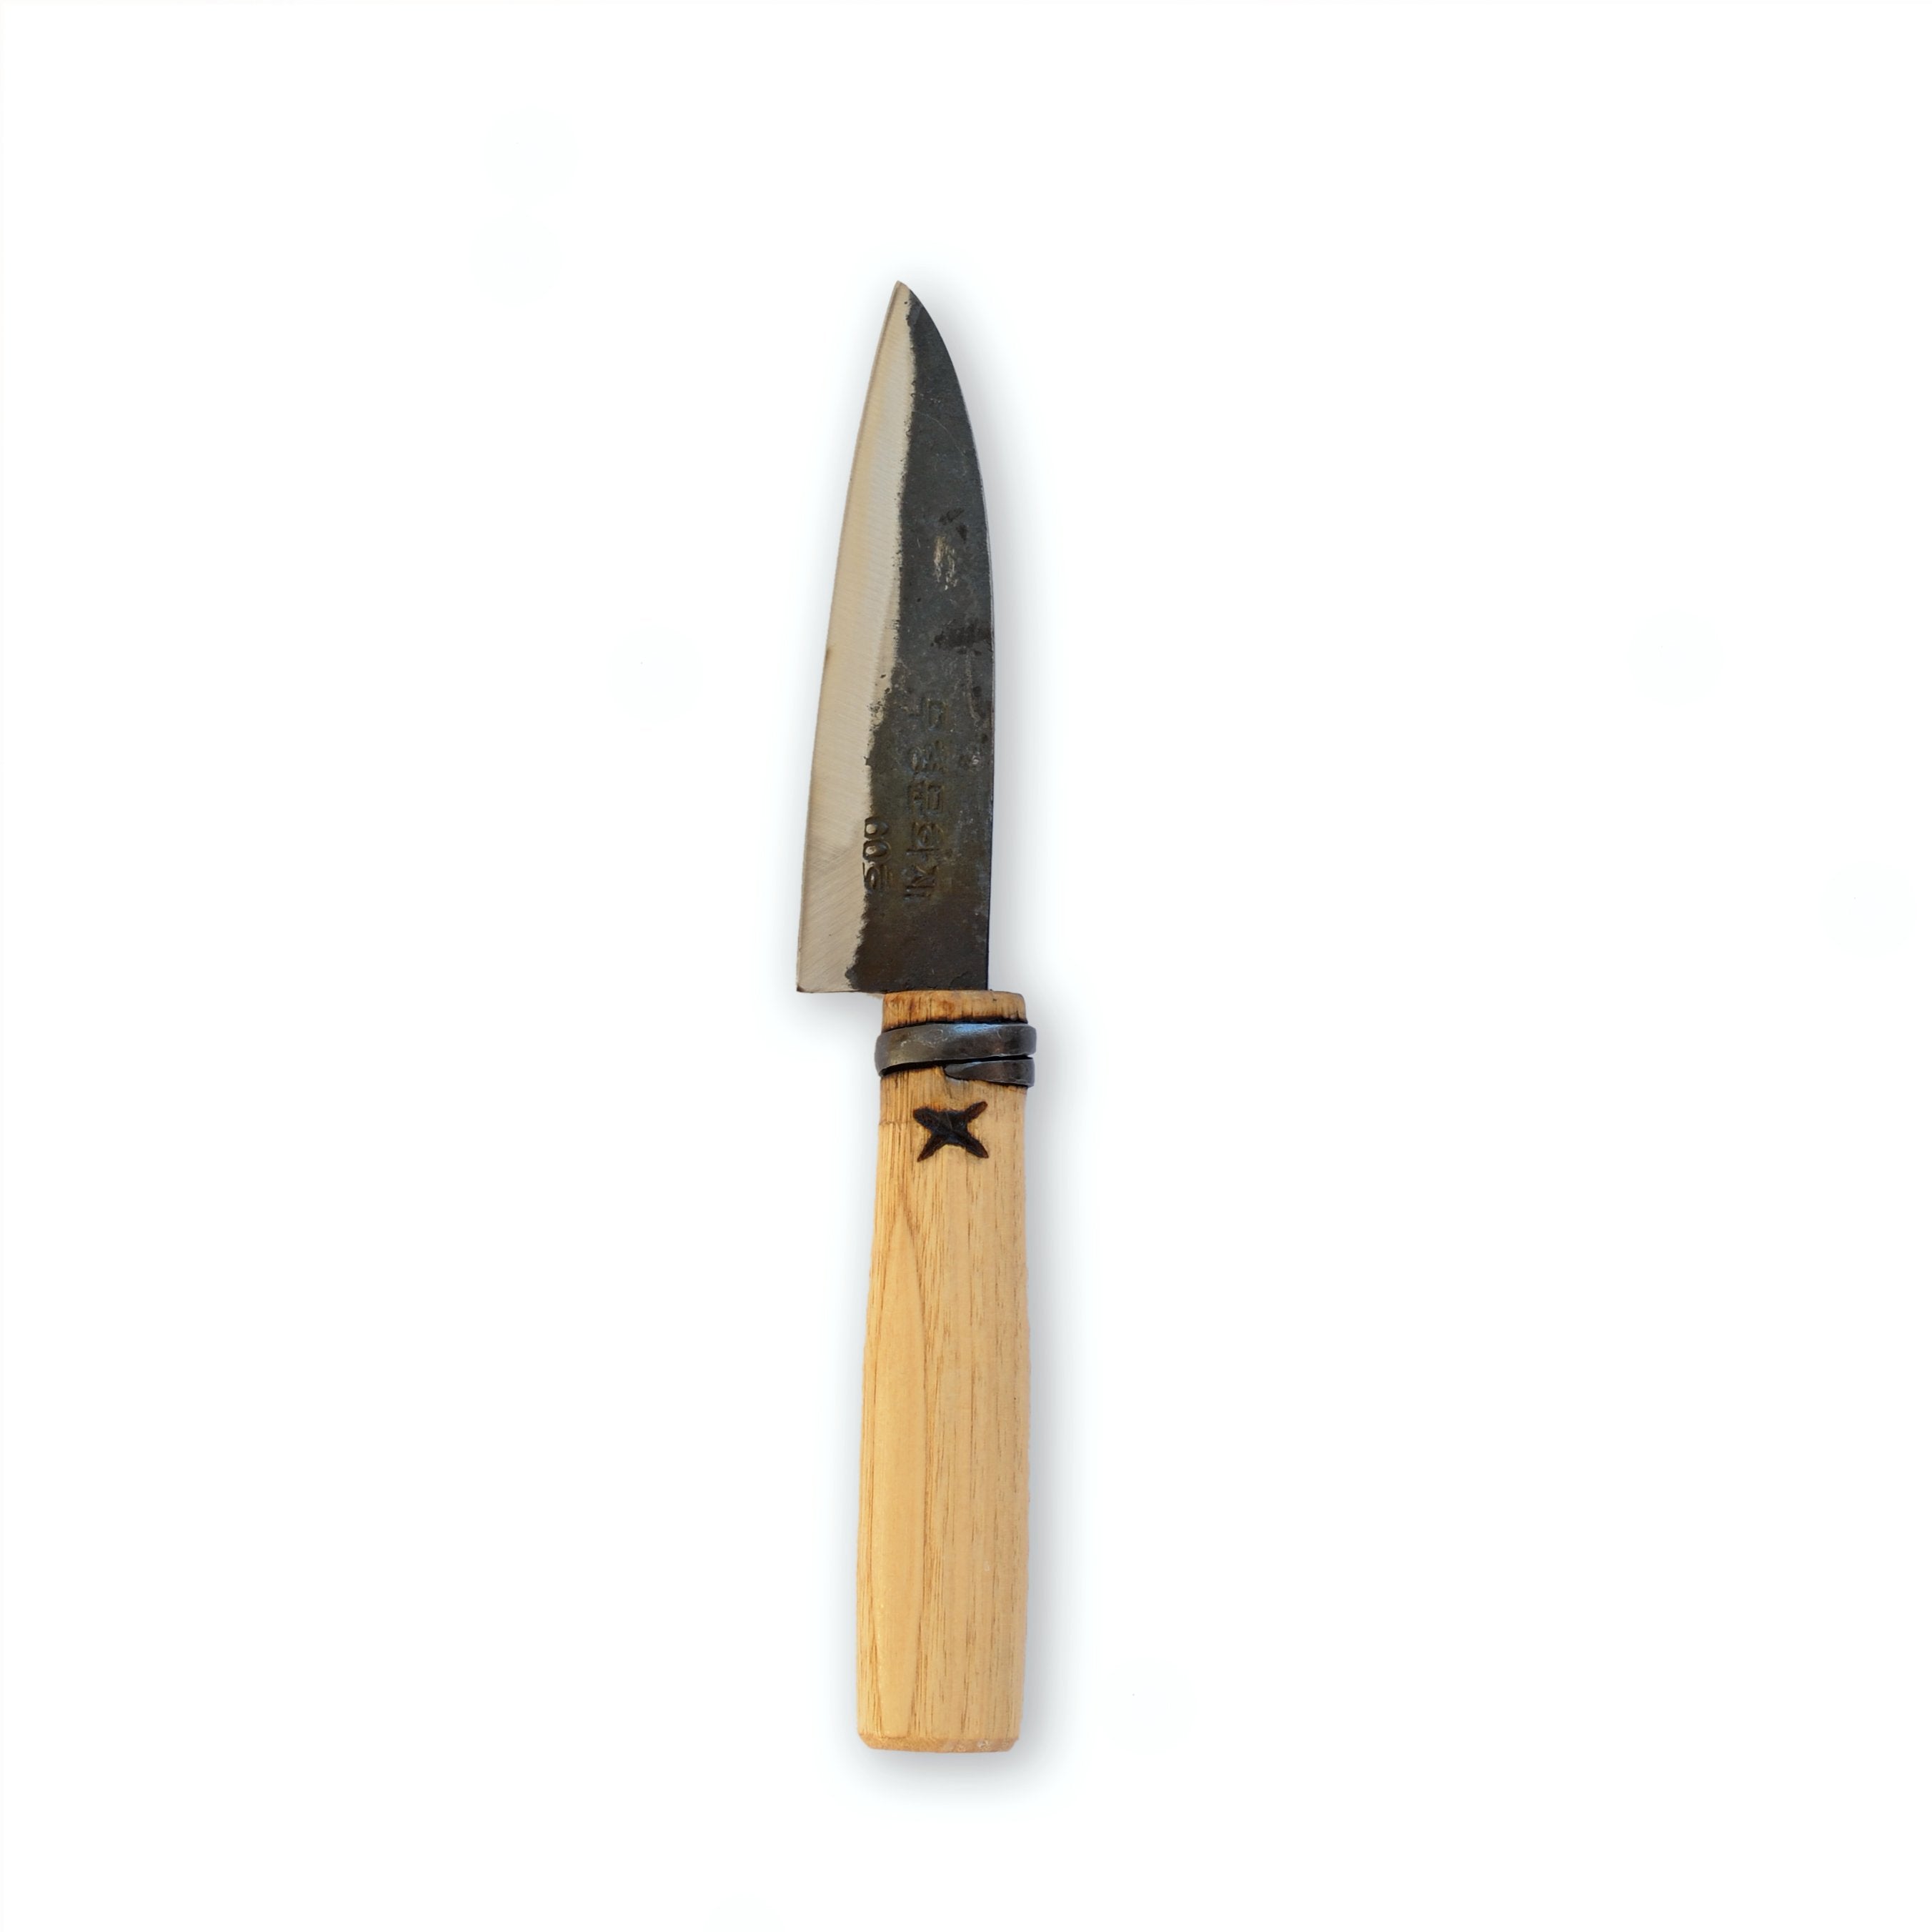 Paring knife / Skiving knife – AMY ROKE